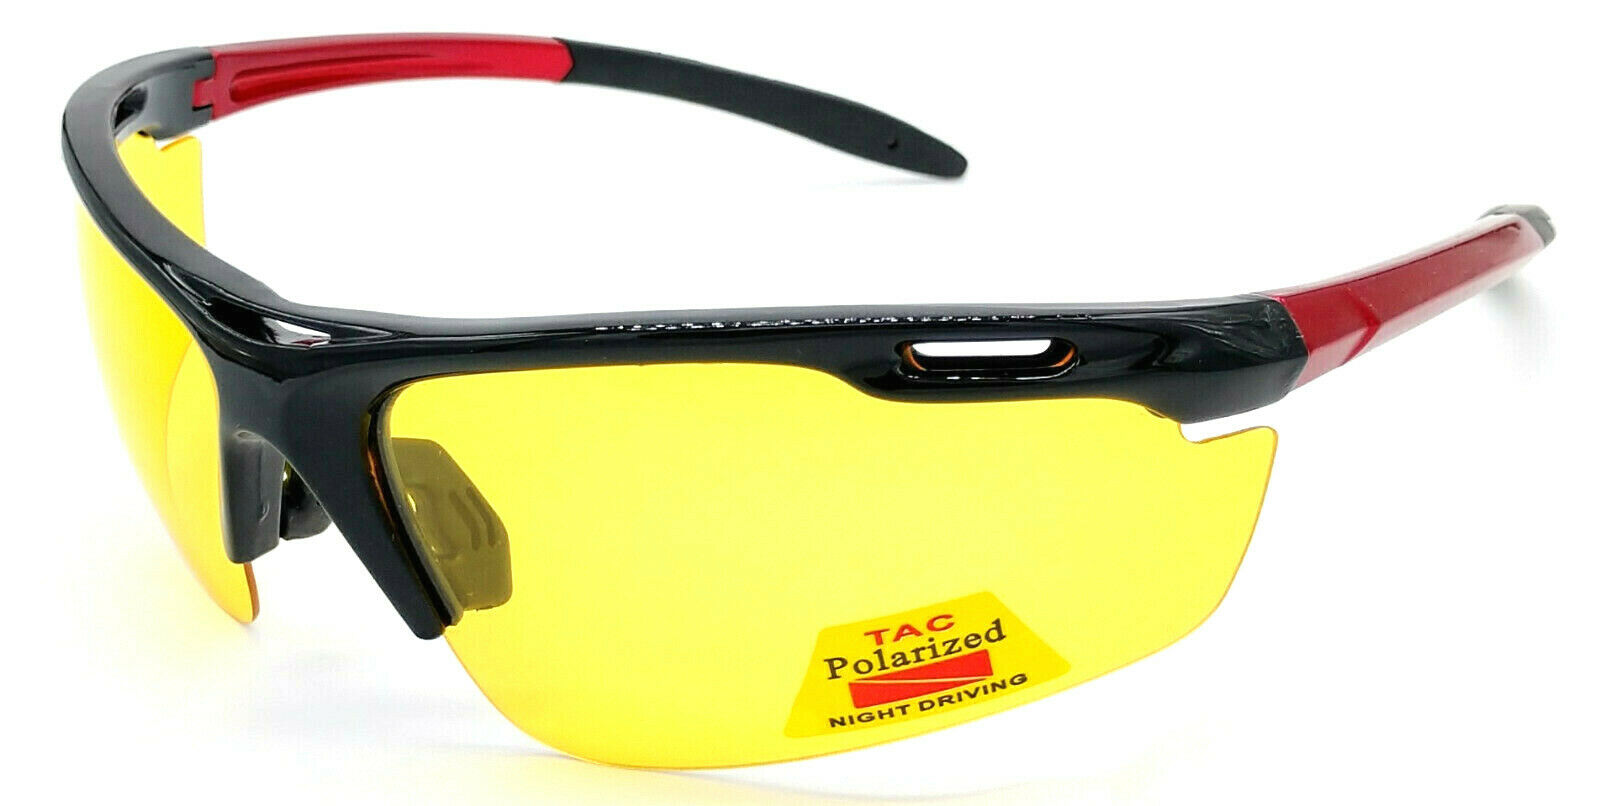 GLARE-X Night Driving Glasses Polarized Yellow Lens Reduces Glare Large Blade